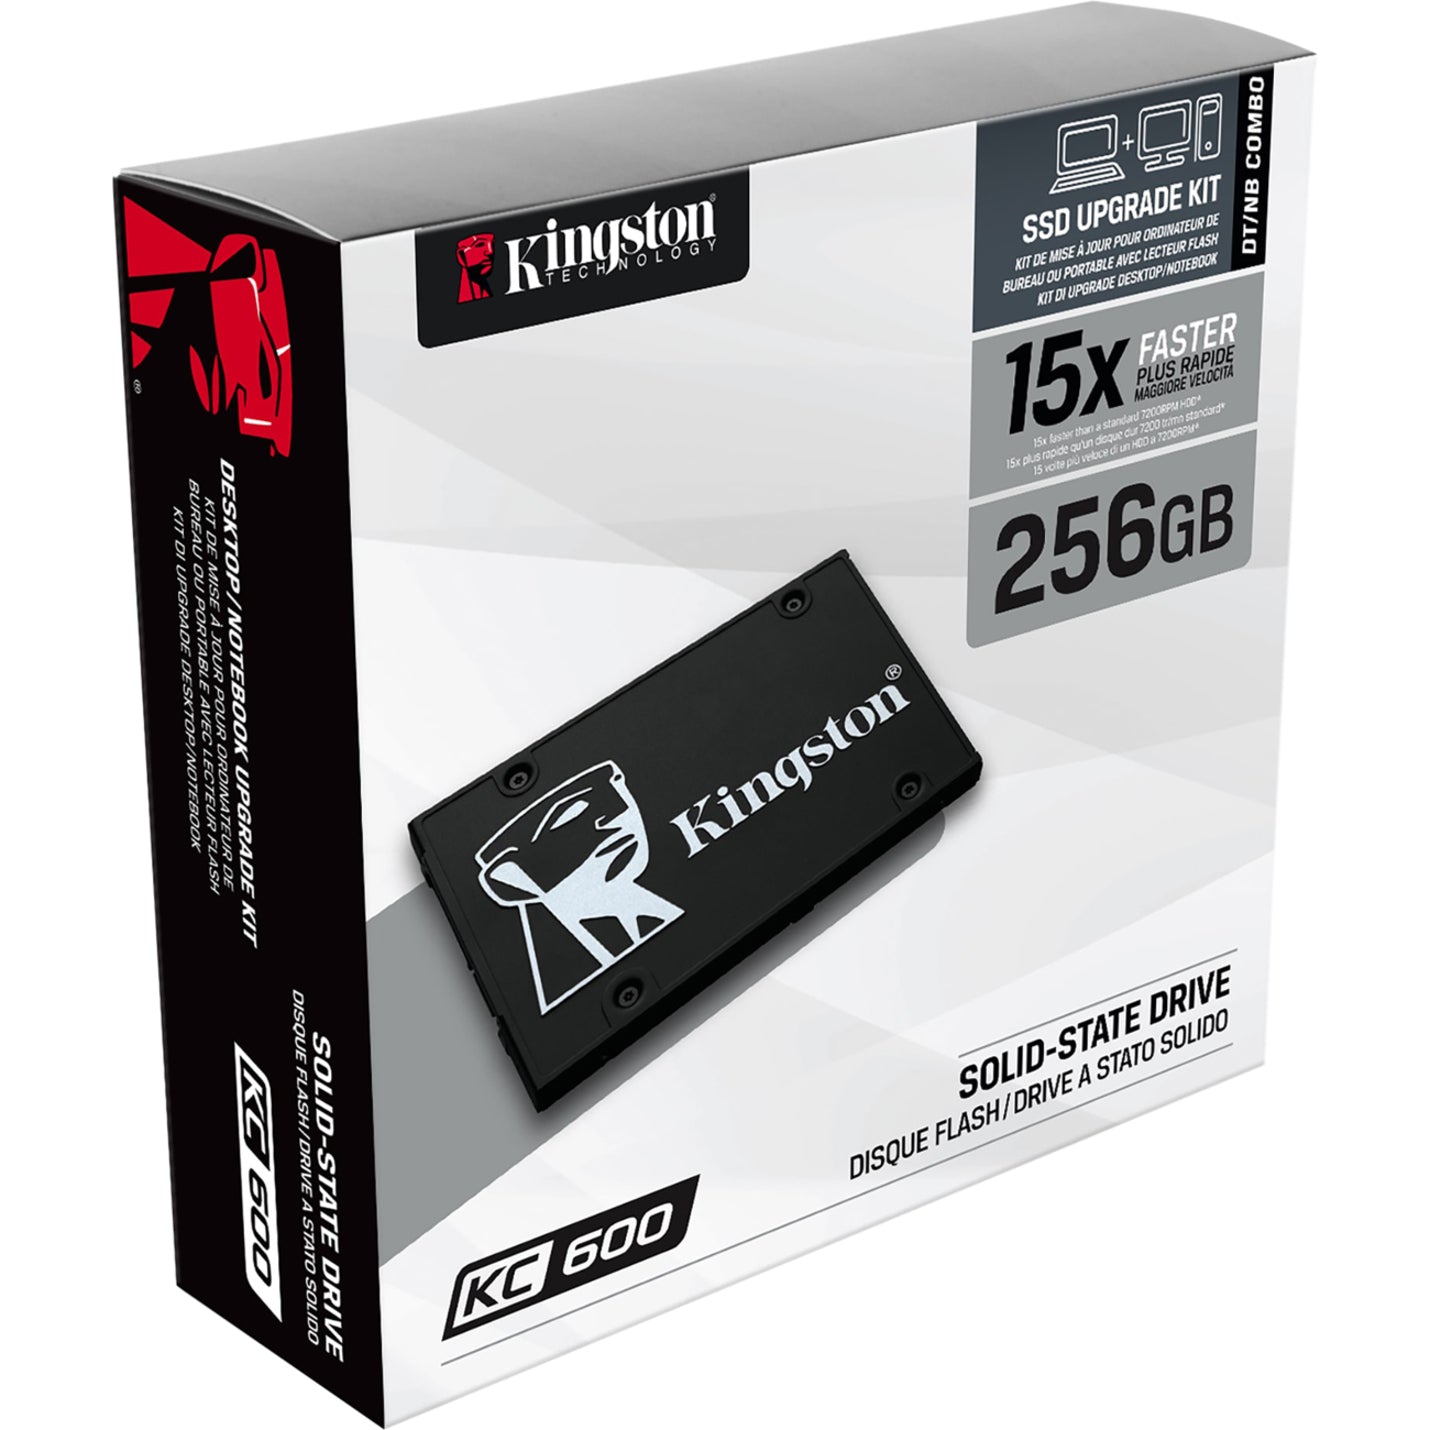 Kingston SKC600/256G KC600 SSD 256GB SATA3 2.5, 6-Year Warranty, 550MB/s Read, 500MB/s Write